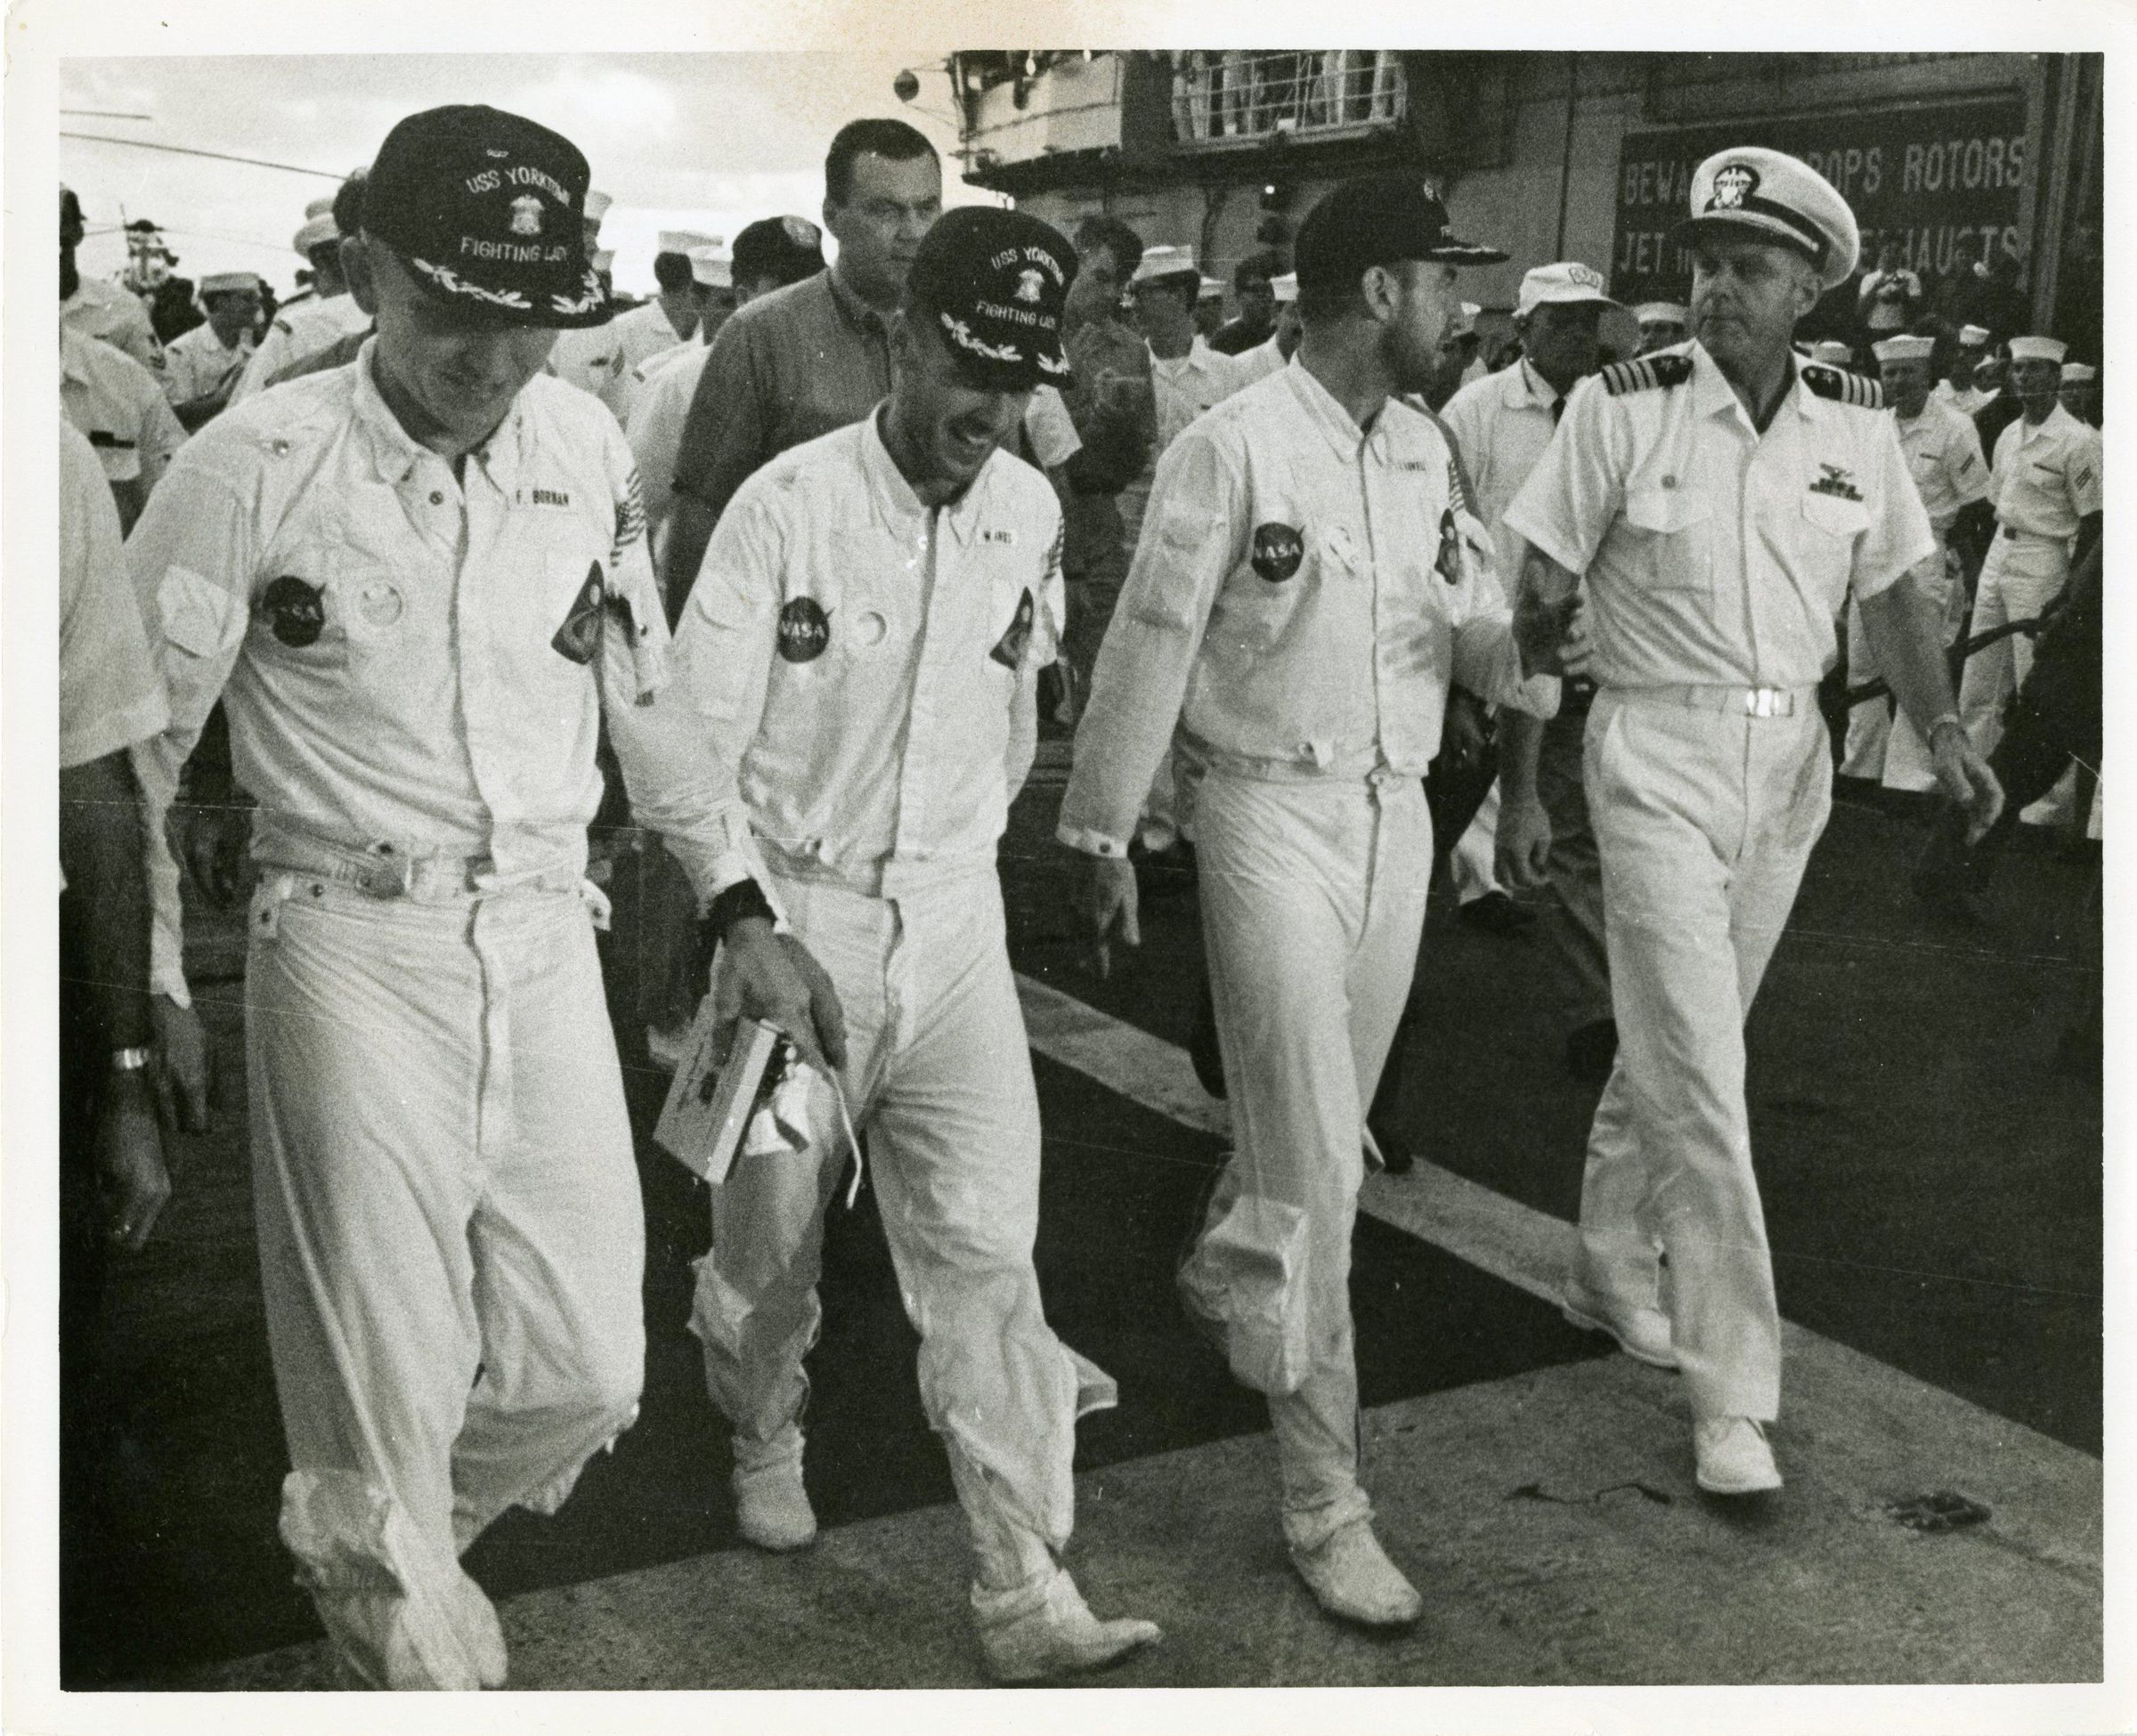 Primary Image of The Apollo 8 Astronauts Walk the Flightdeck